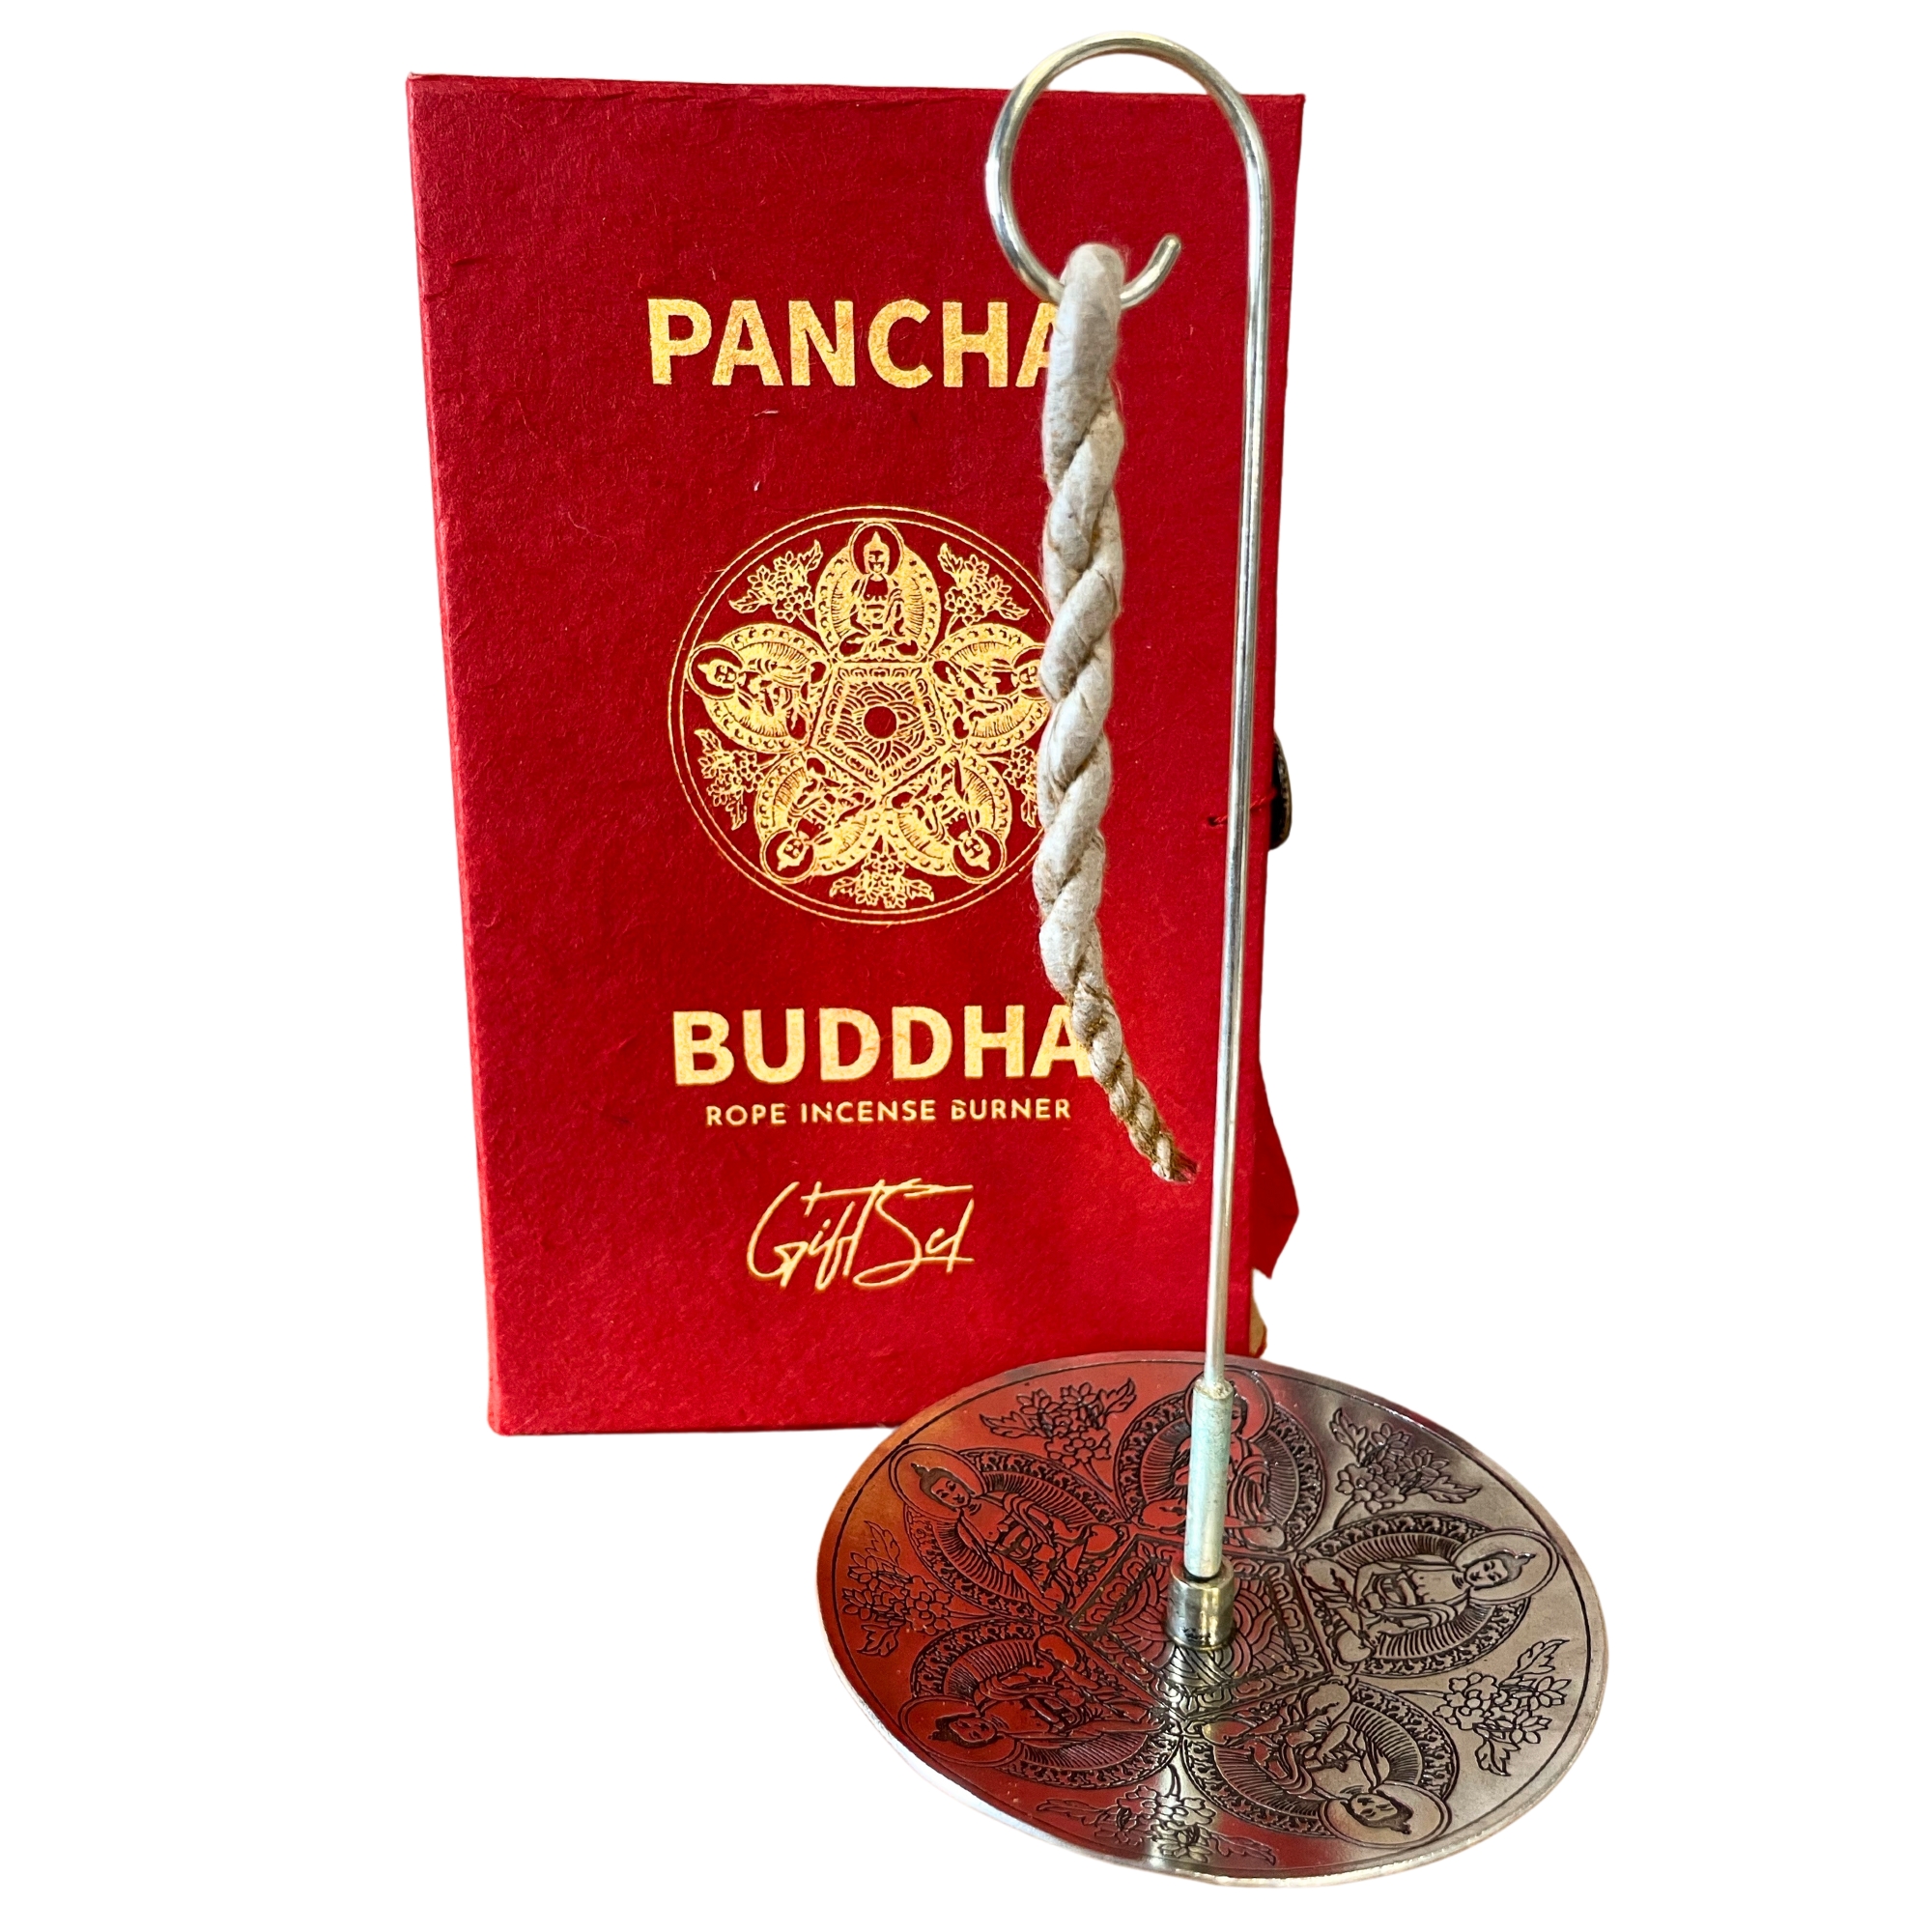 Rope Incense and Silver Plated Holder Set - Pancha Buddha